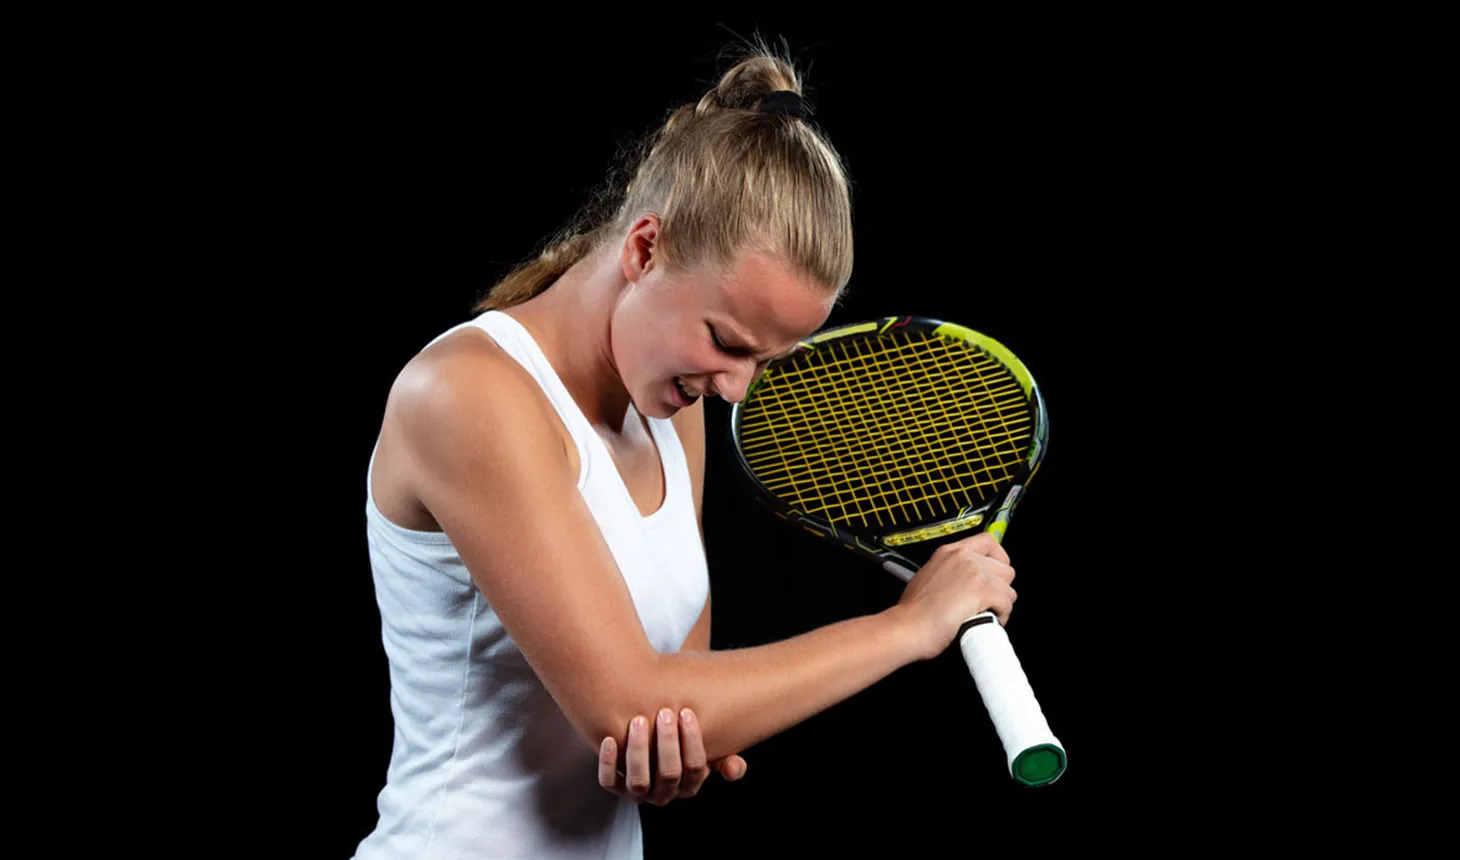 Tennis Elbow (Lateral Epicondylitis): Causes, Symptoms, Treatment